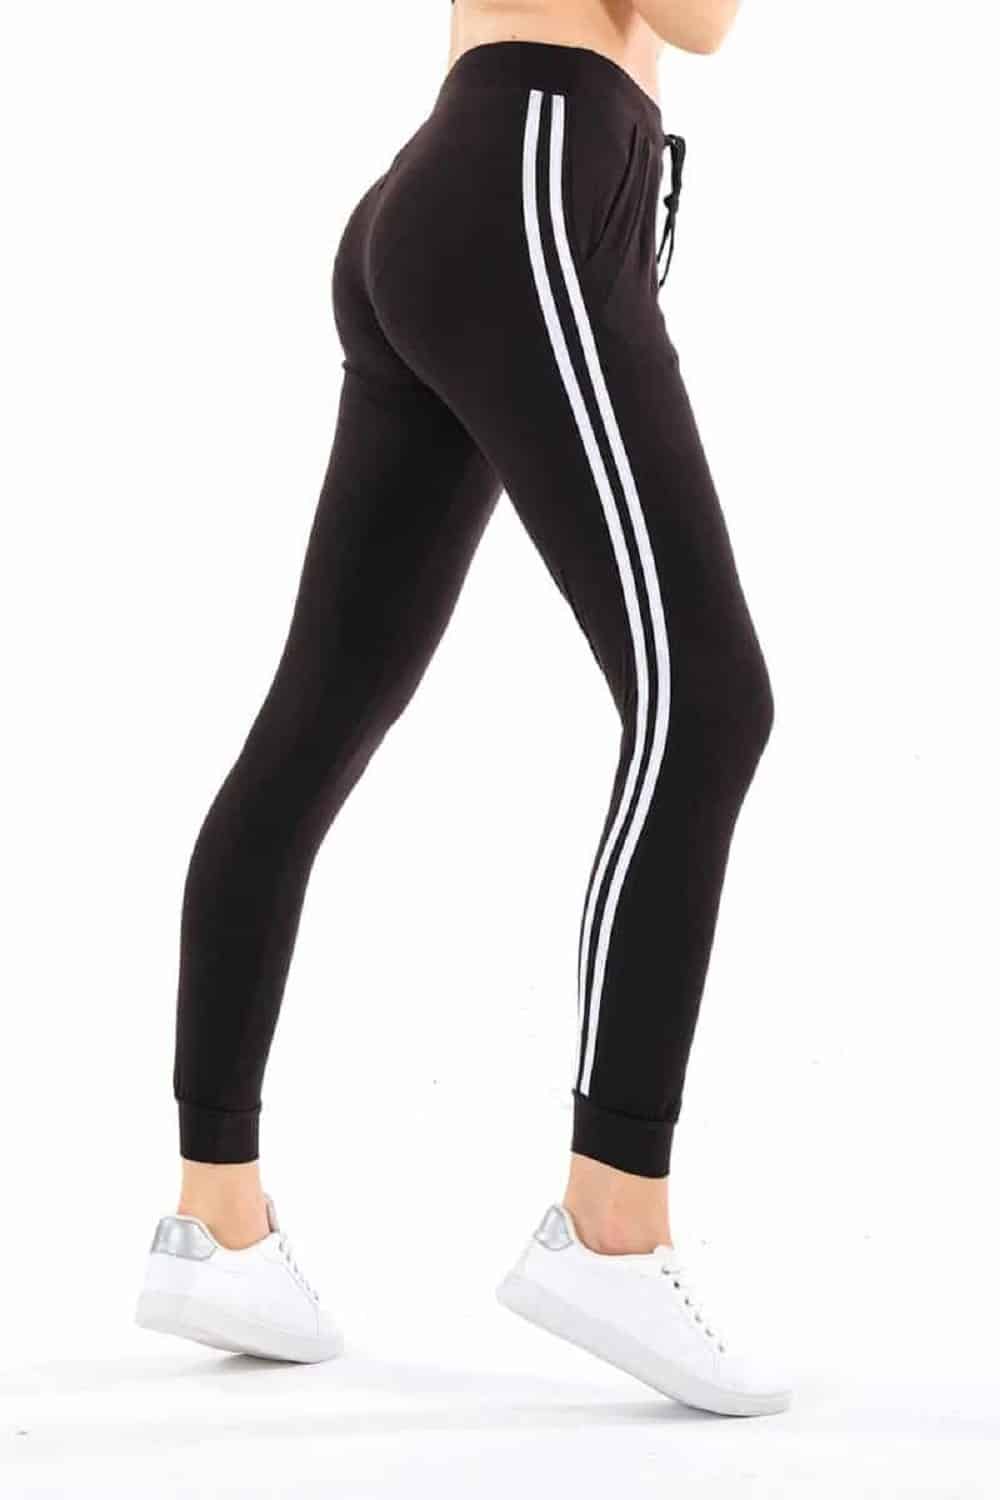 SLAY. Women's Black Jogger Pants With White Stripes